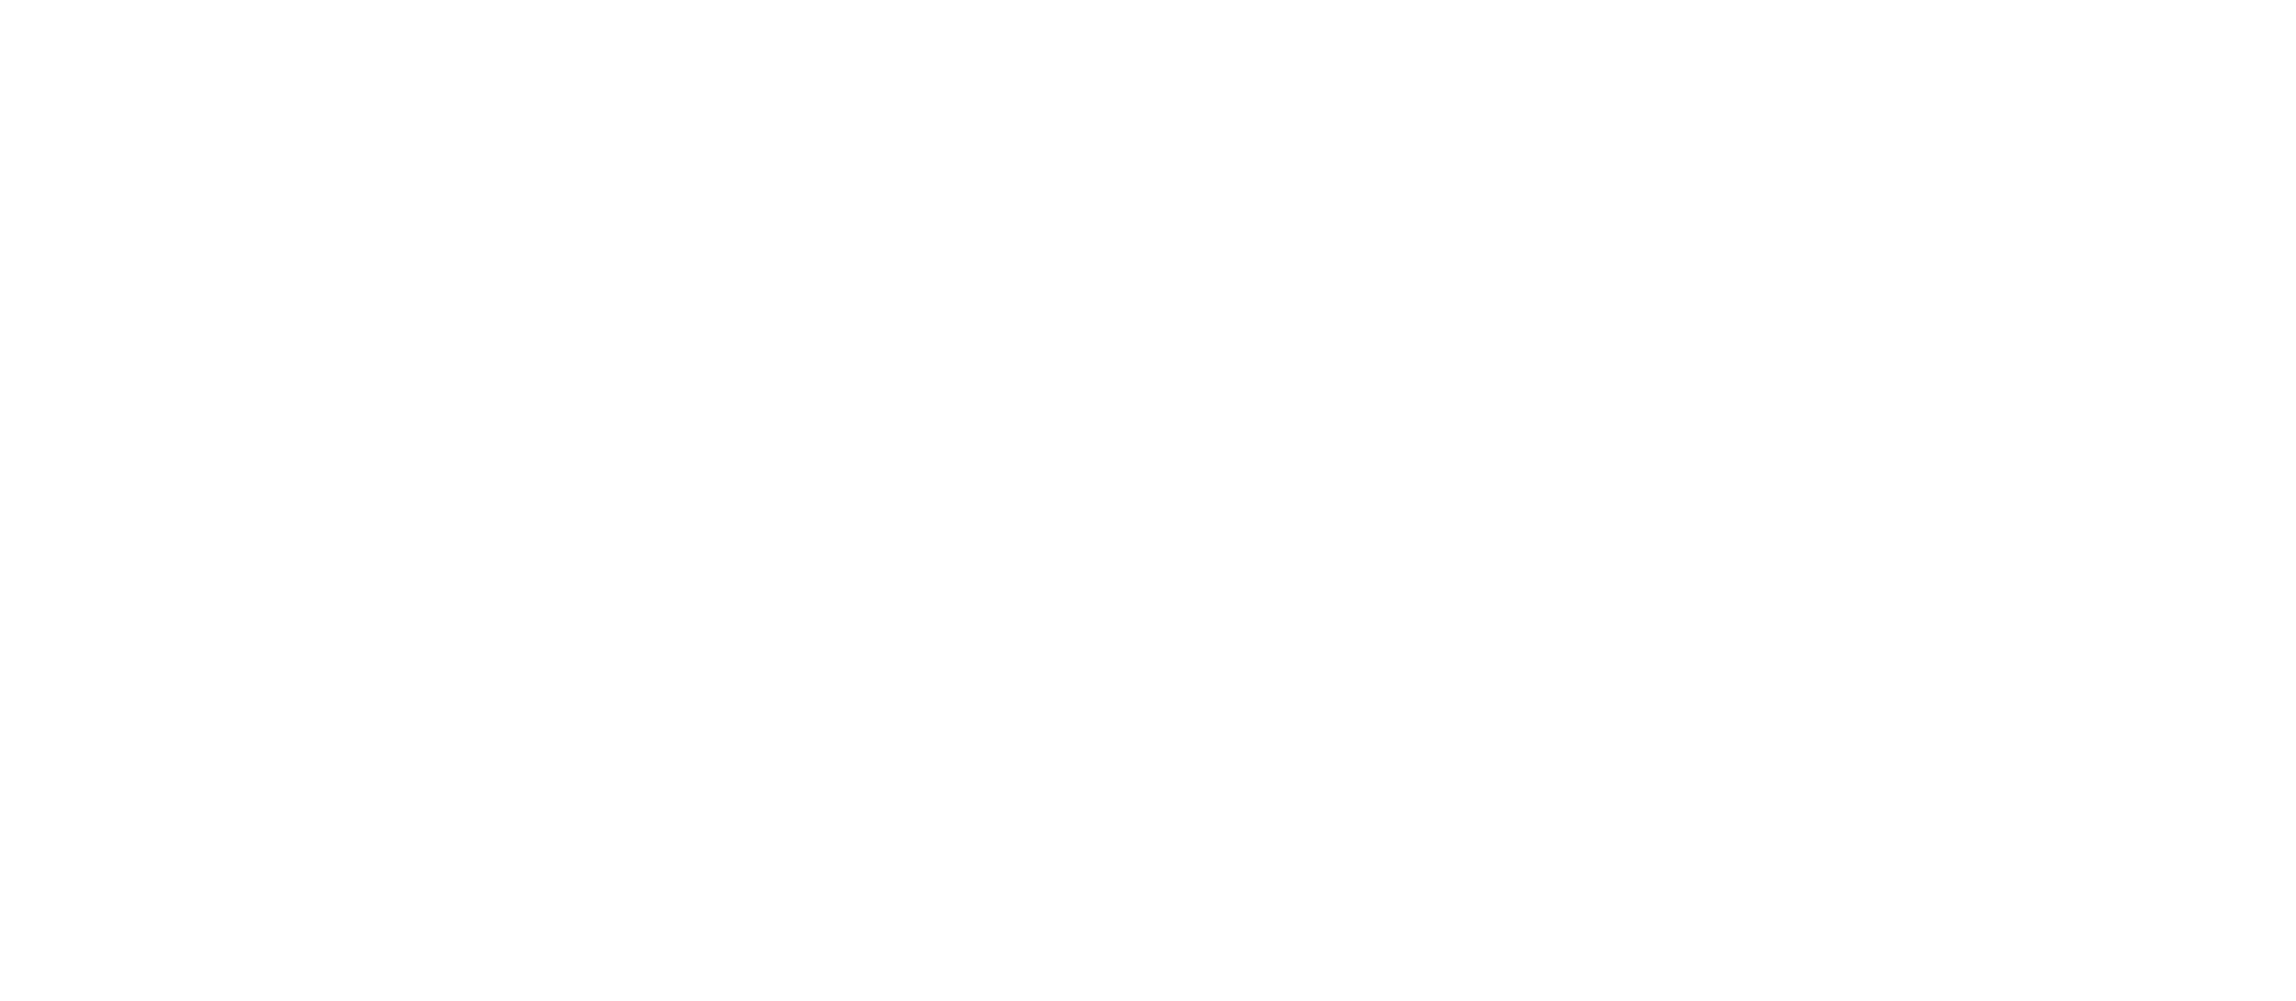 WPconx